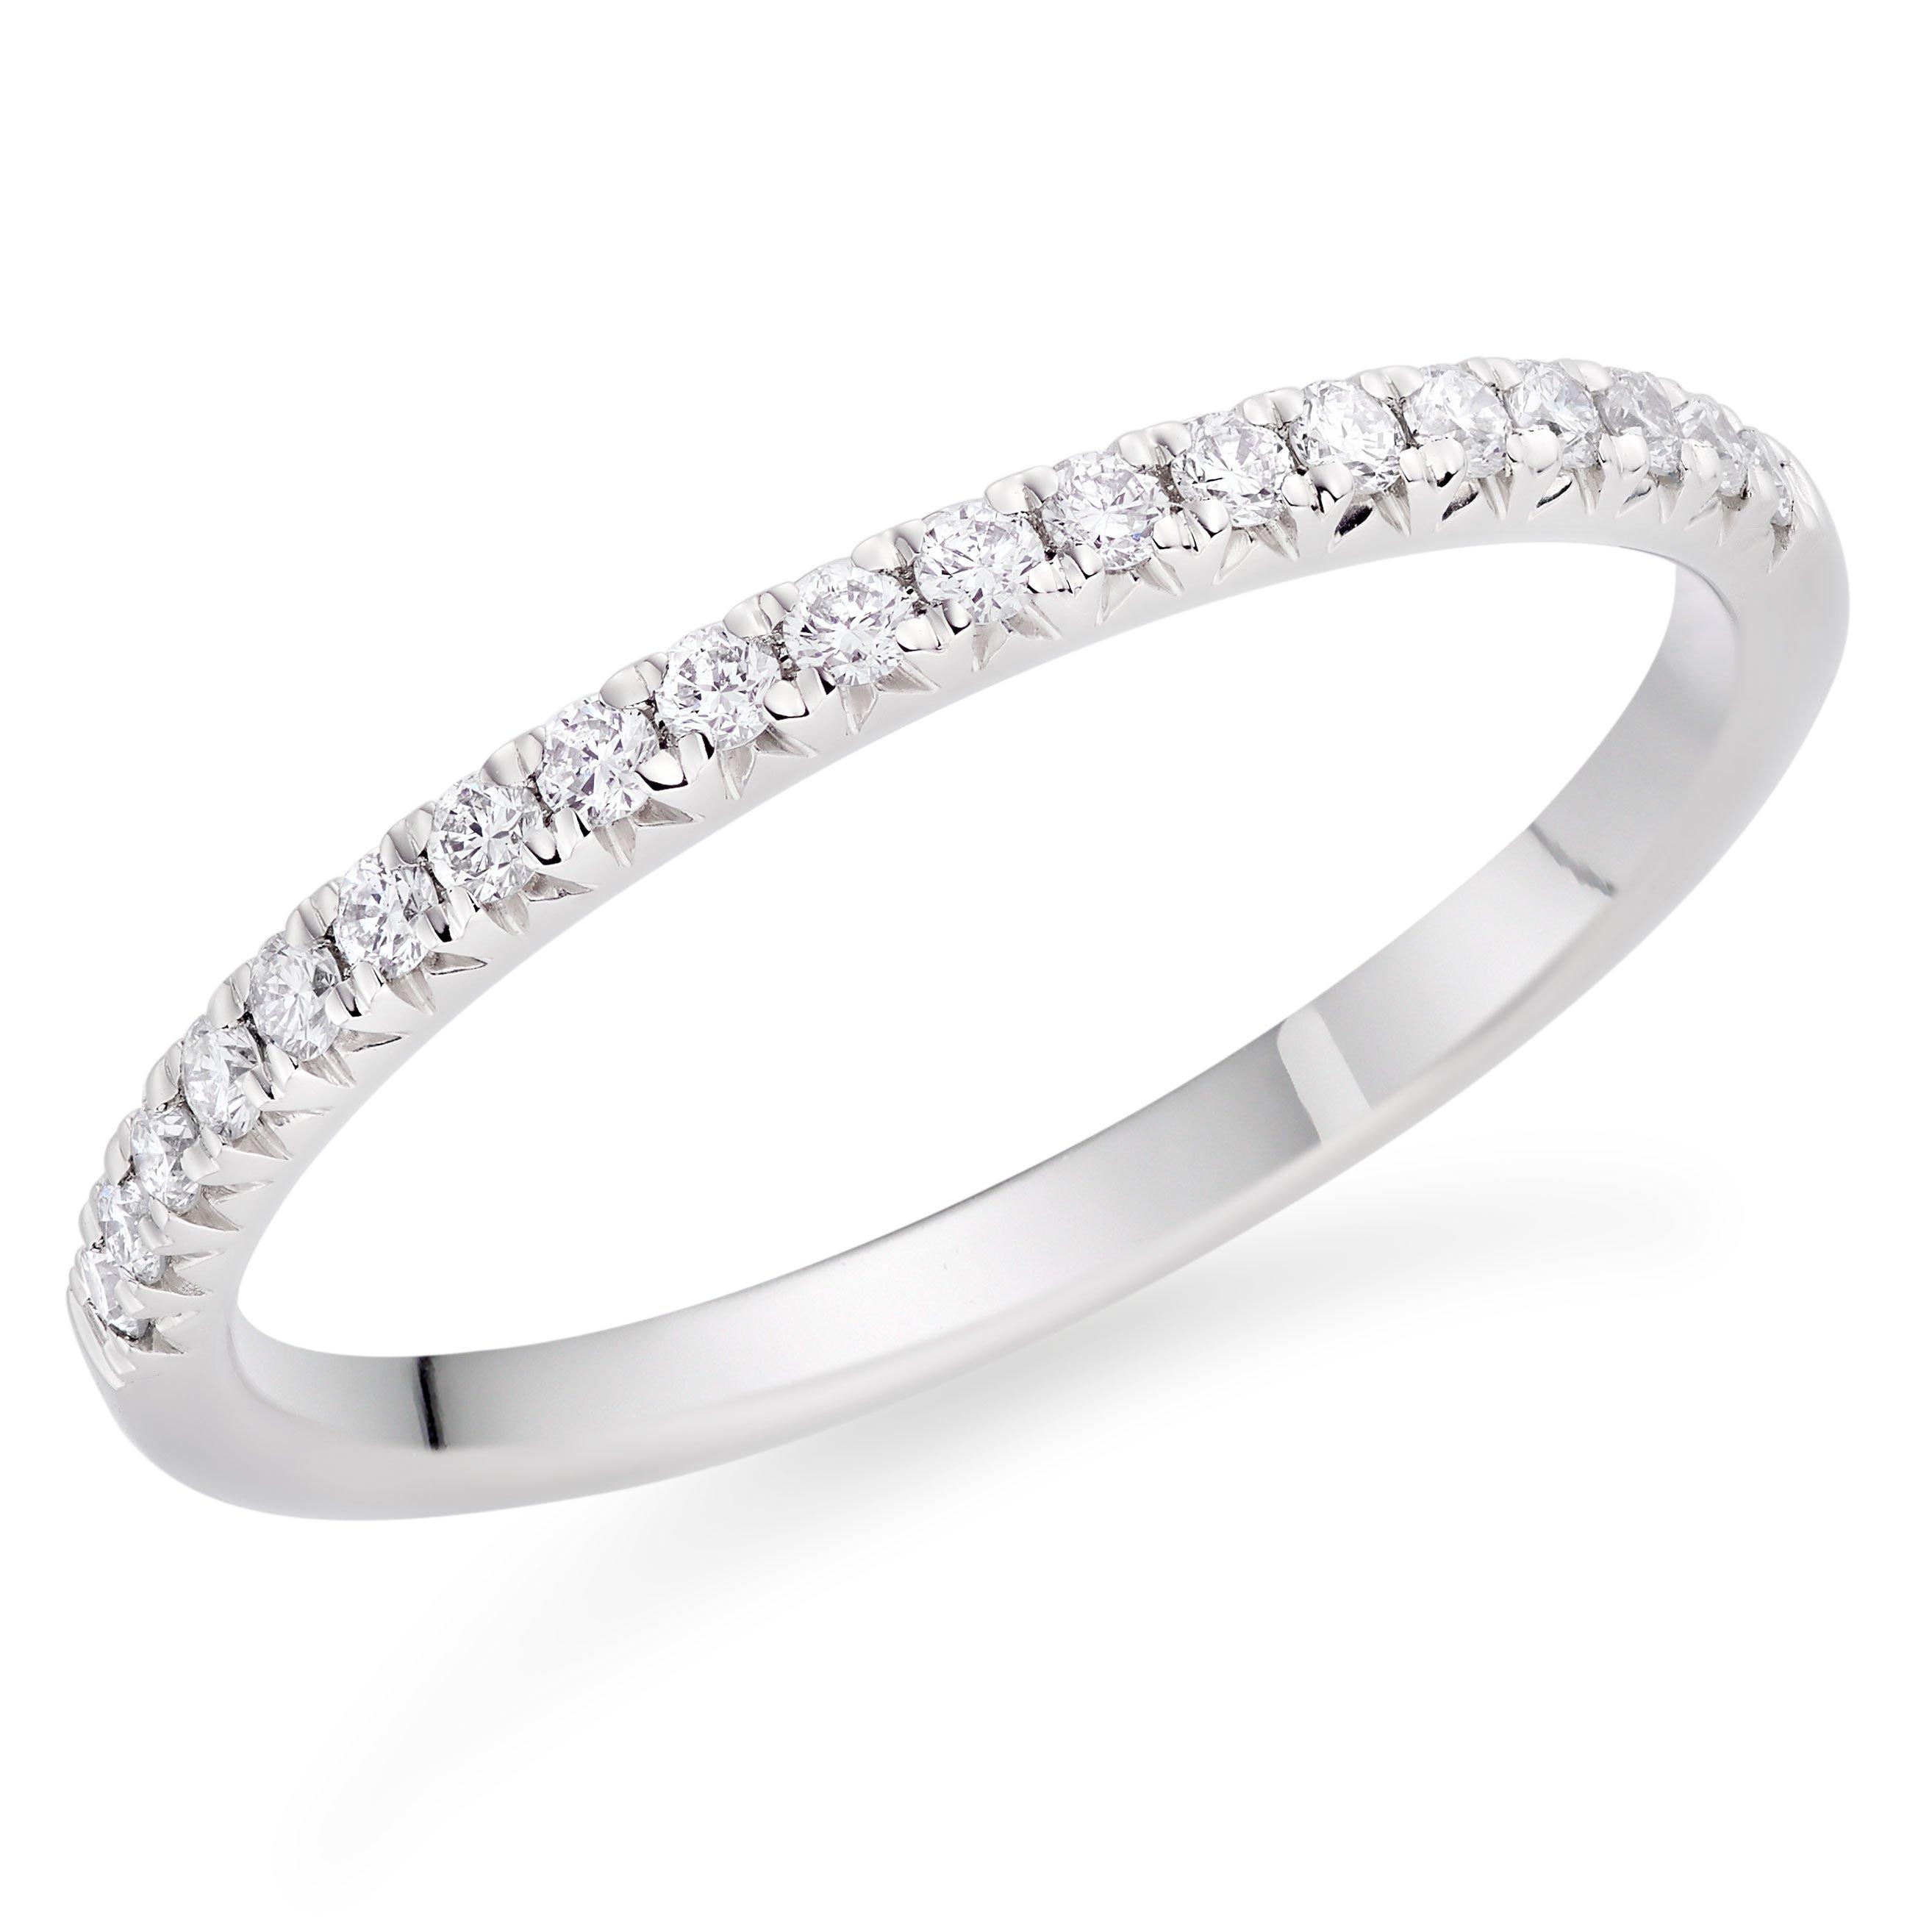 18ct White Gold Diamond Wedding Ring | 0005107 | Beaverbrooks the Jewellers